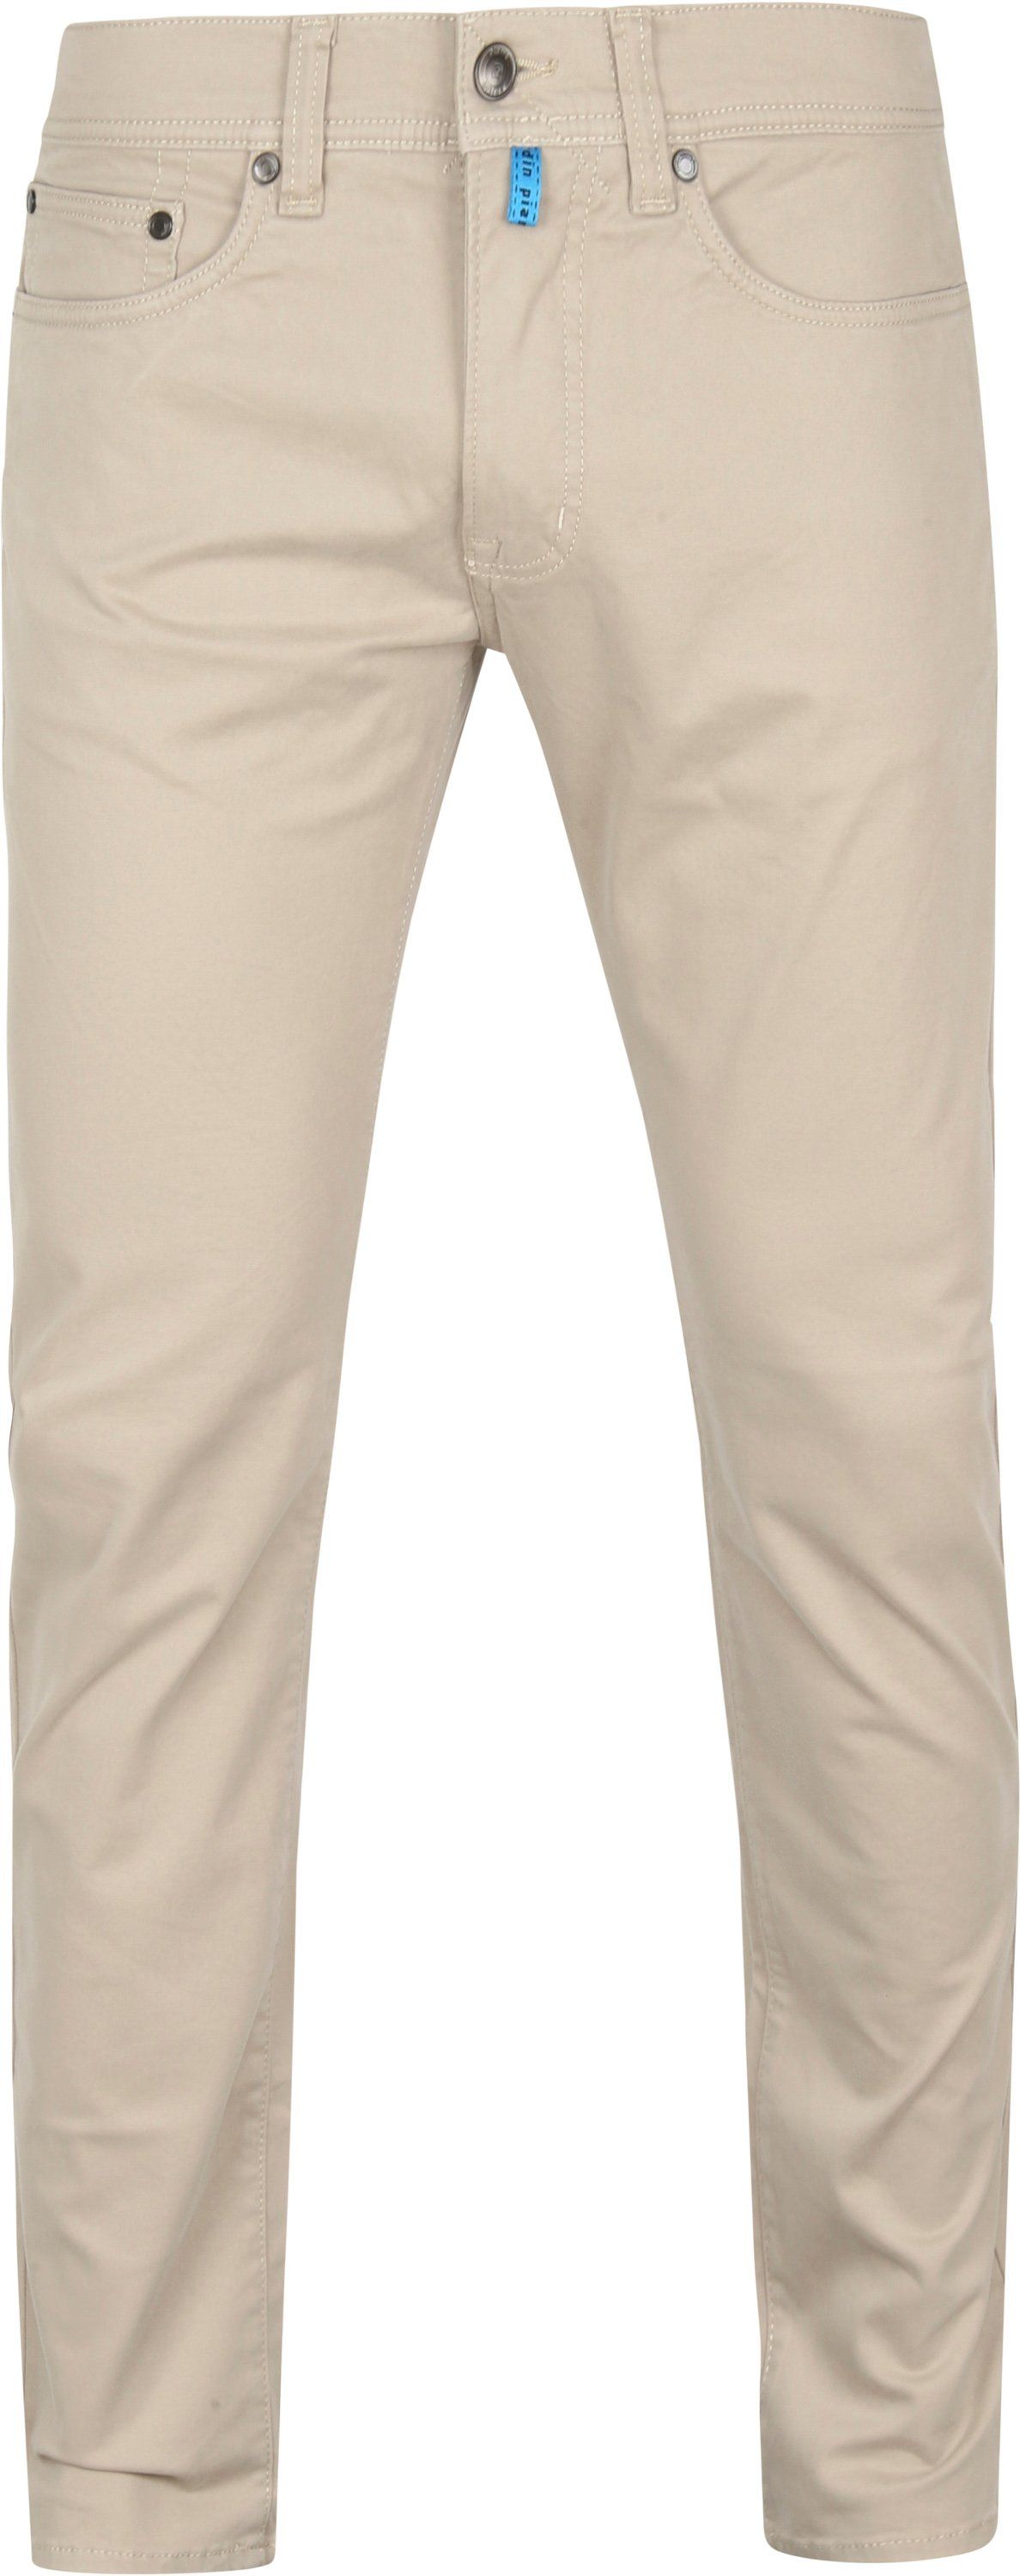 Pierre Cardin 5 Pocket Pants Antibes Beige Khaki size W 31